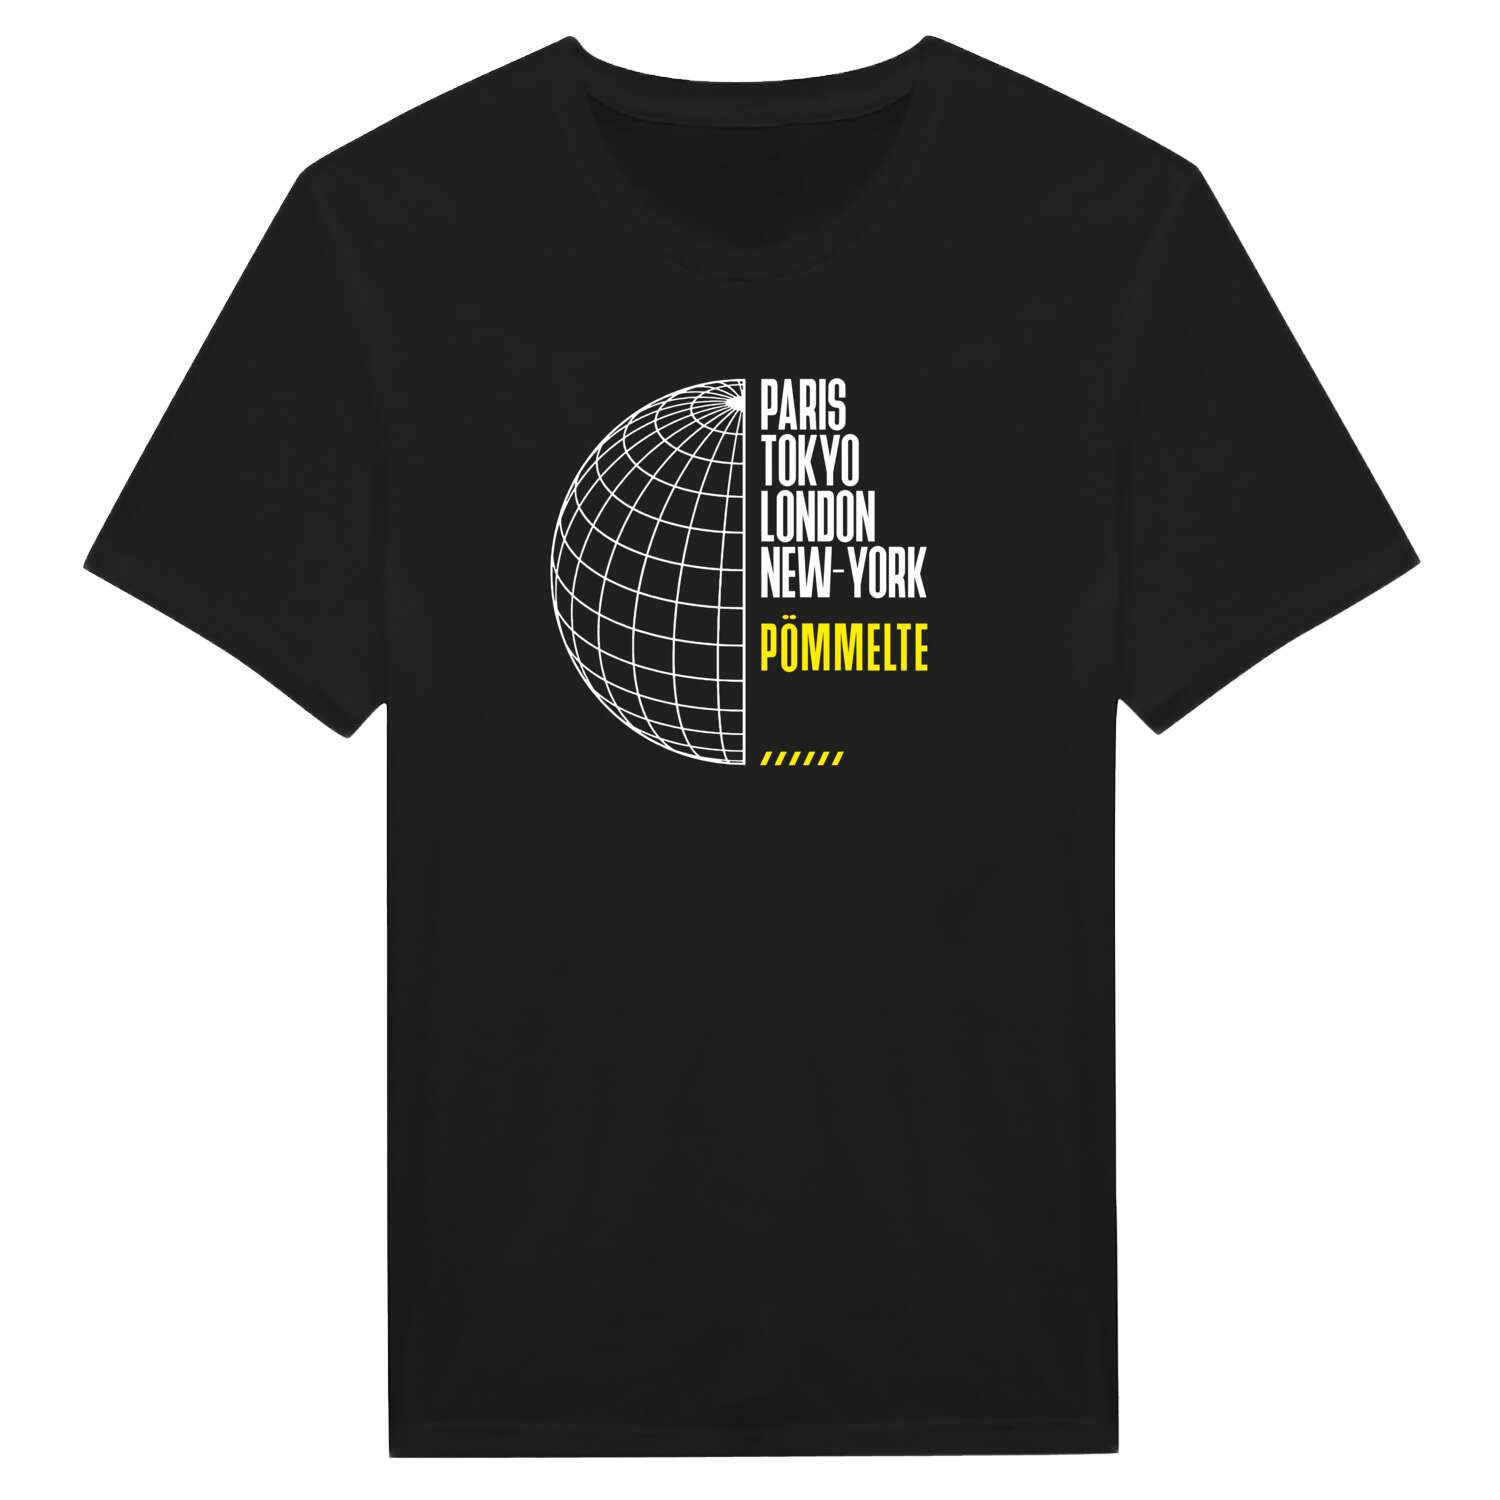 Pömmelte T-Shirt »Paris Tokyo London«